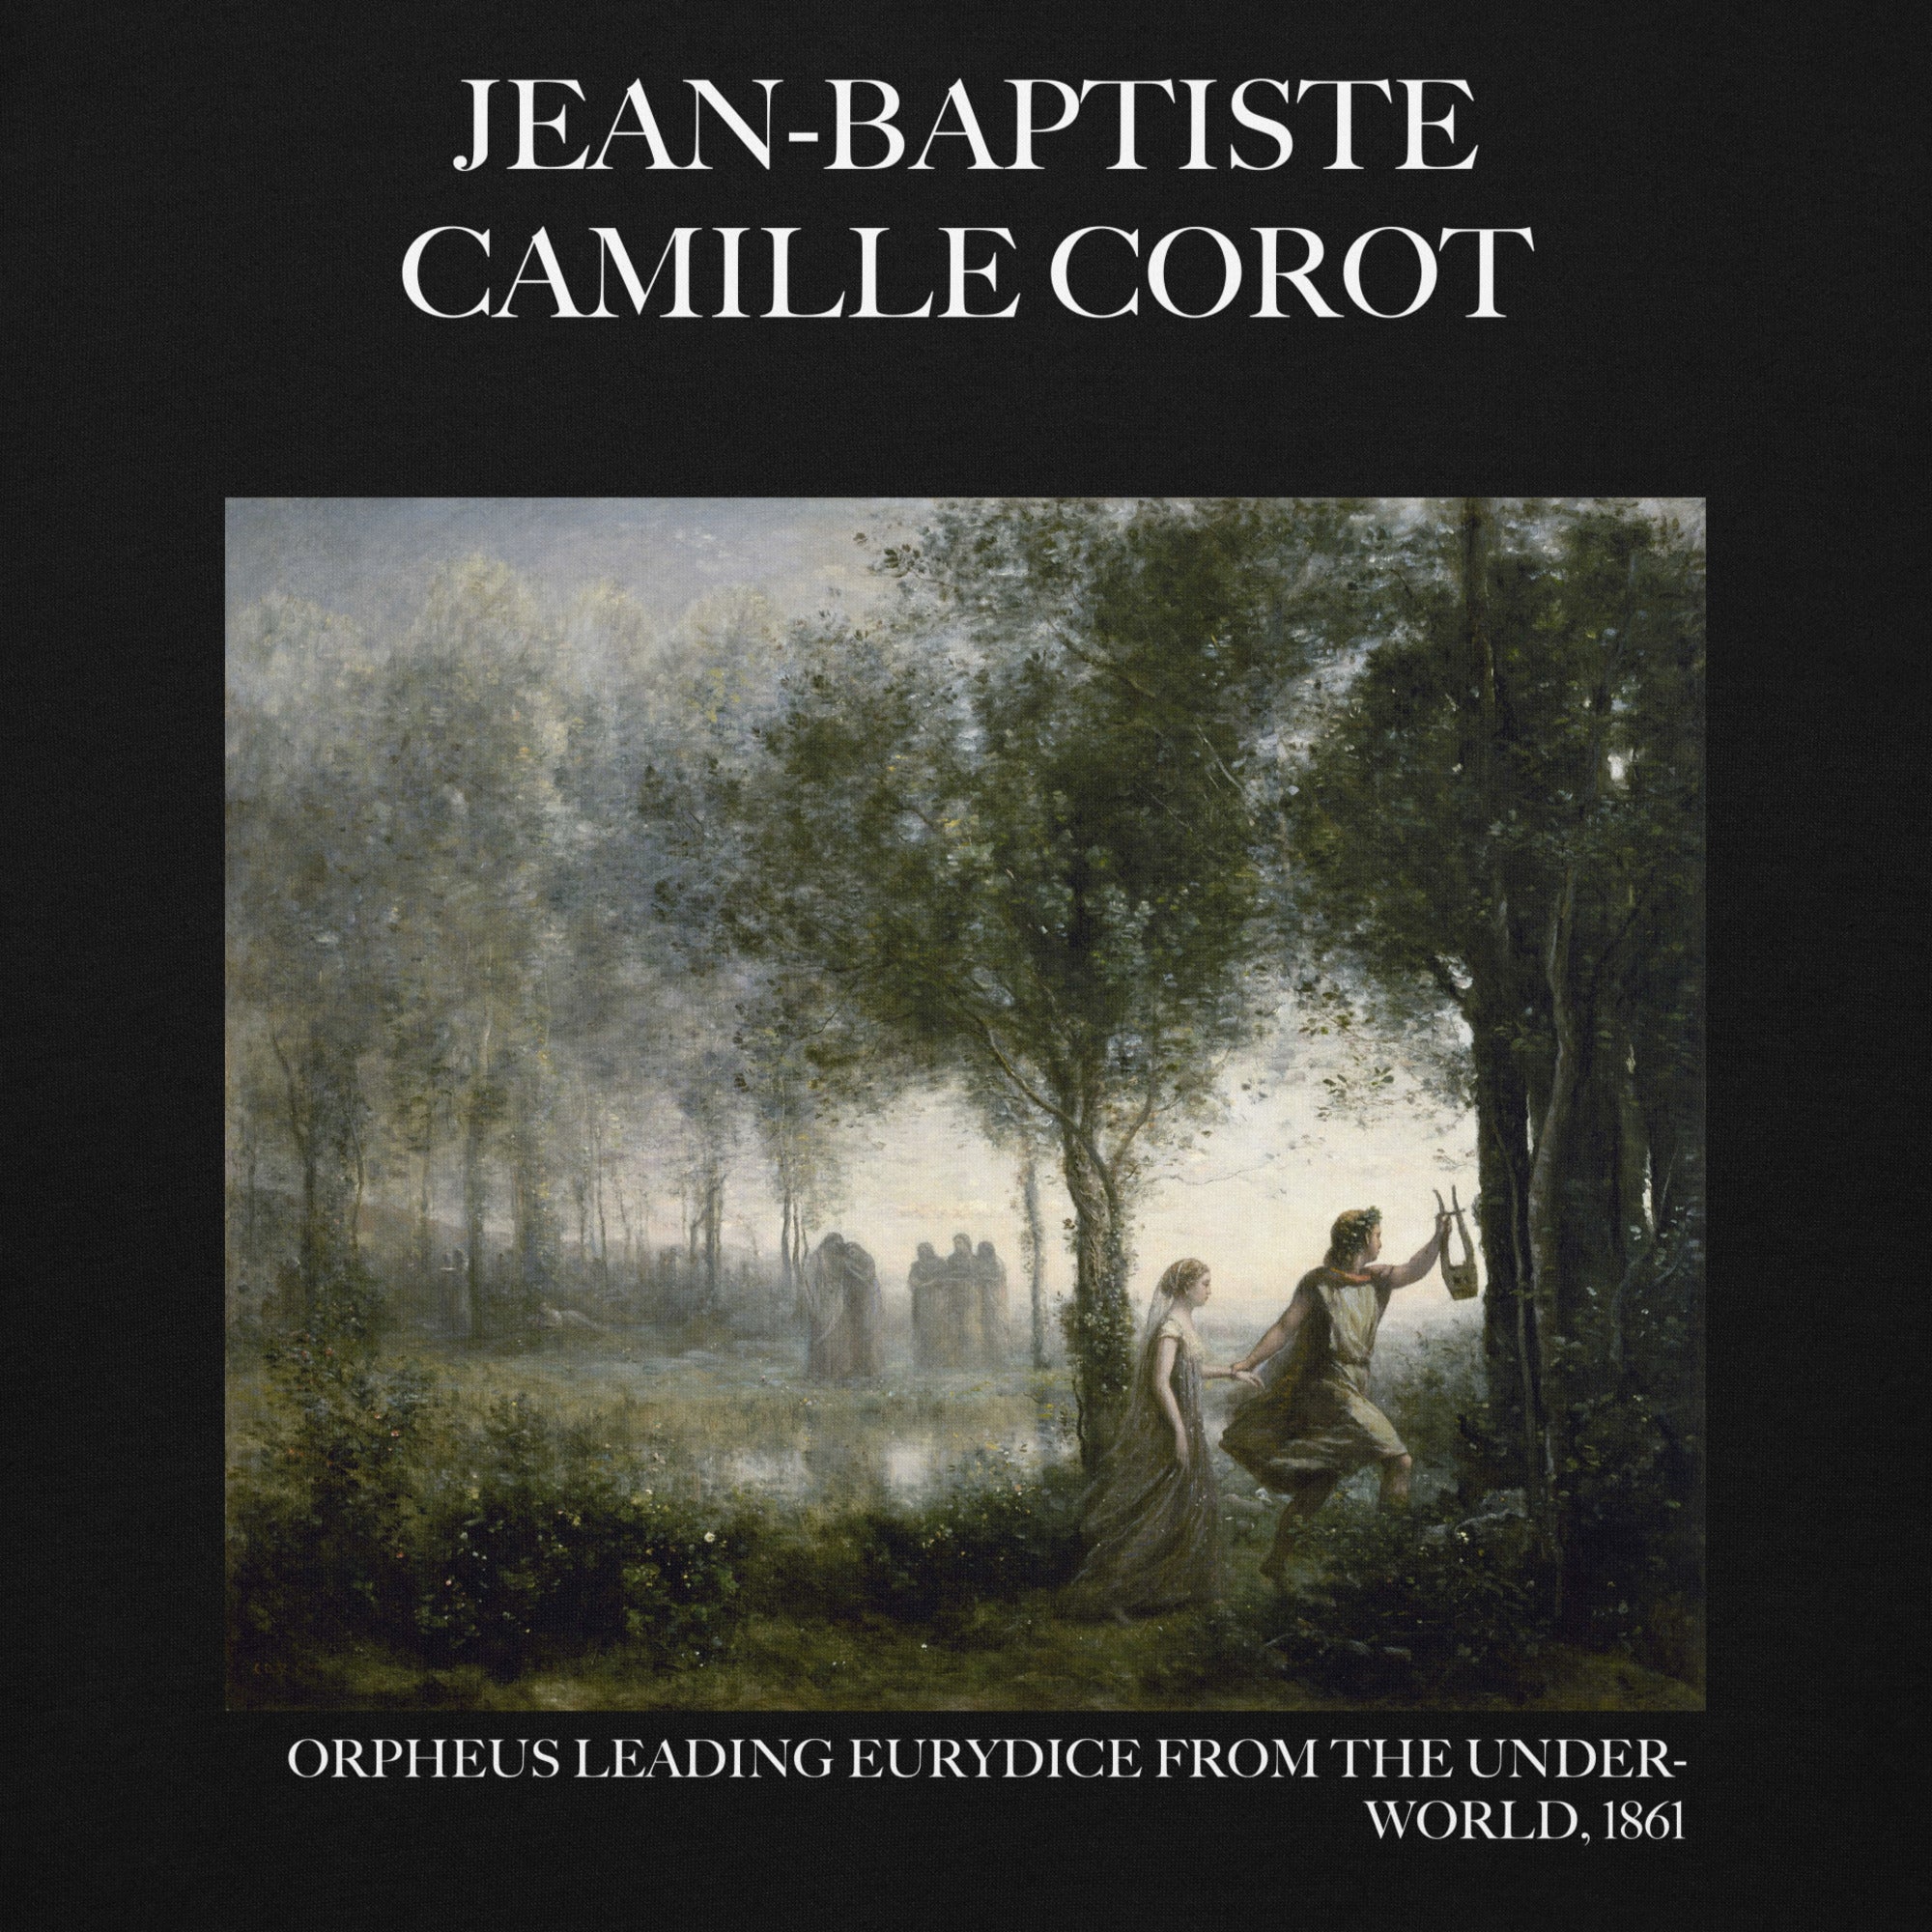 Jean-Baptiste Camille Corot 'Orpheus Leading Eurydice from the Underworld' Famous Painting Hoodie | Unisex Premium Art Hoodie